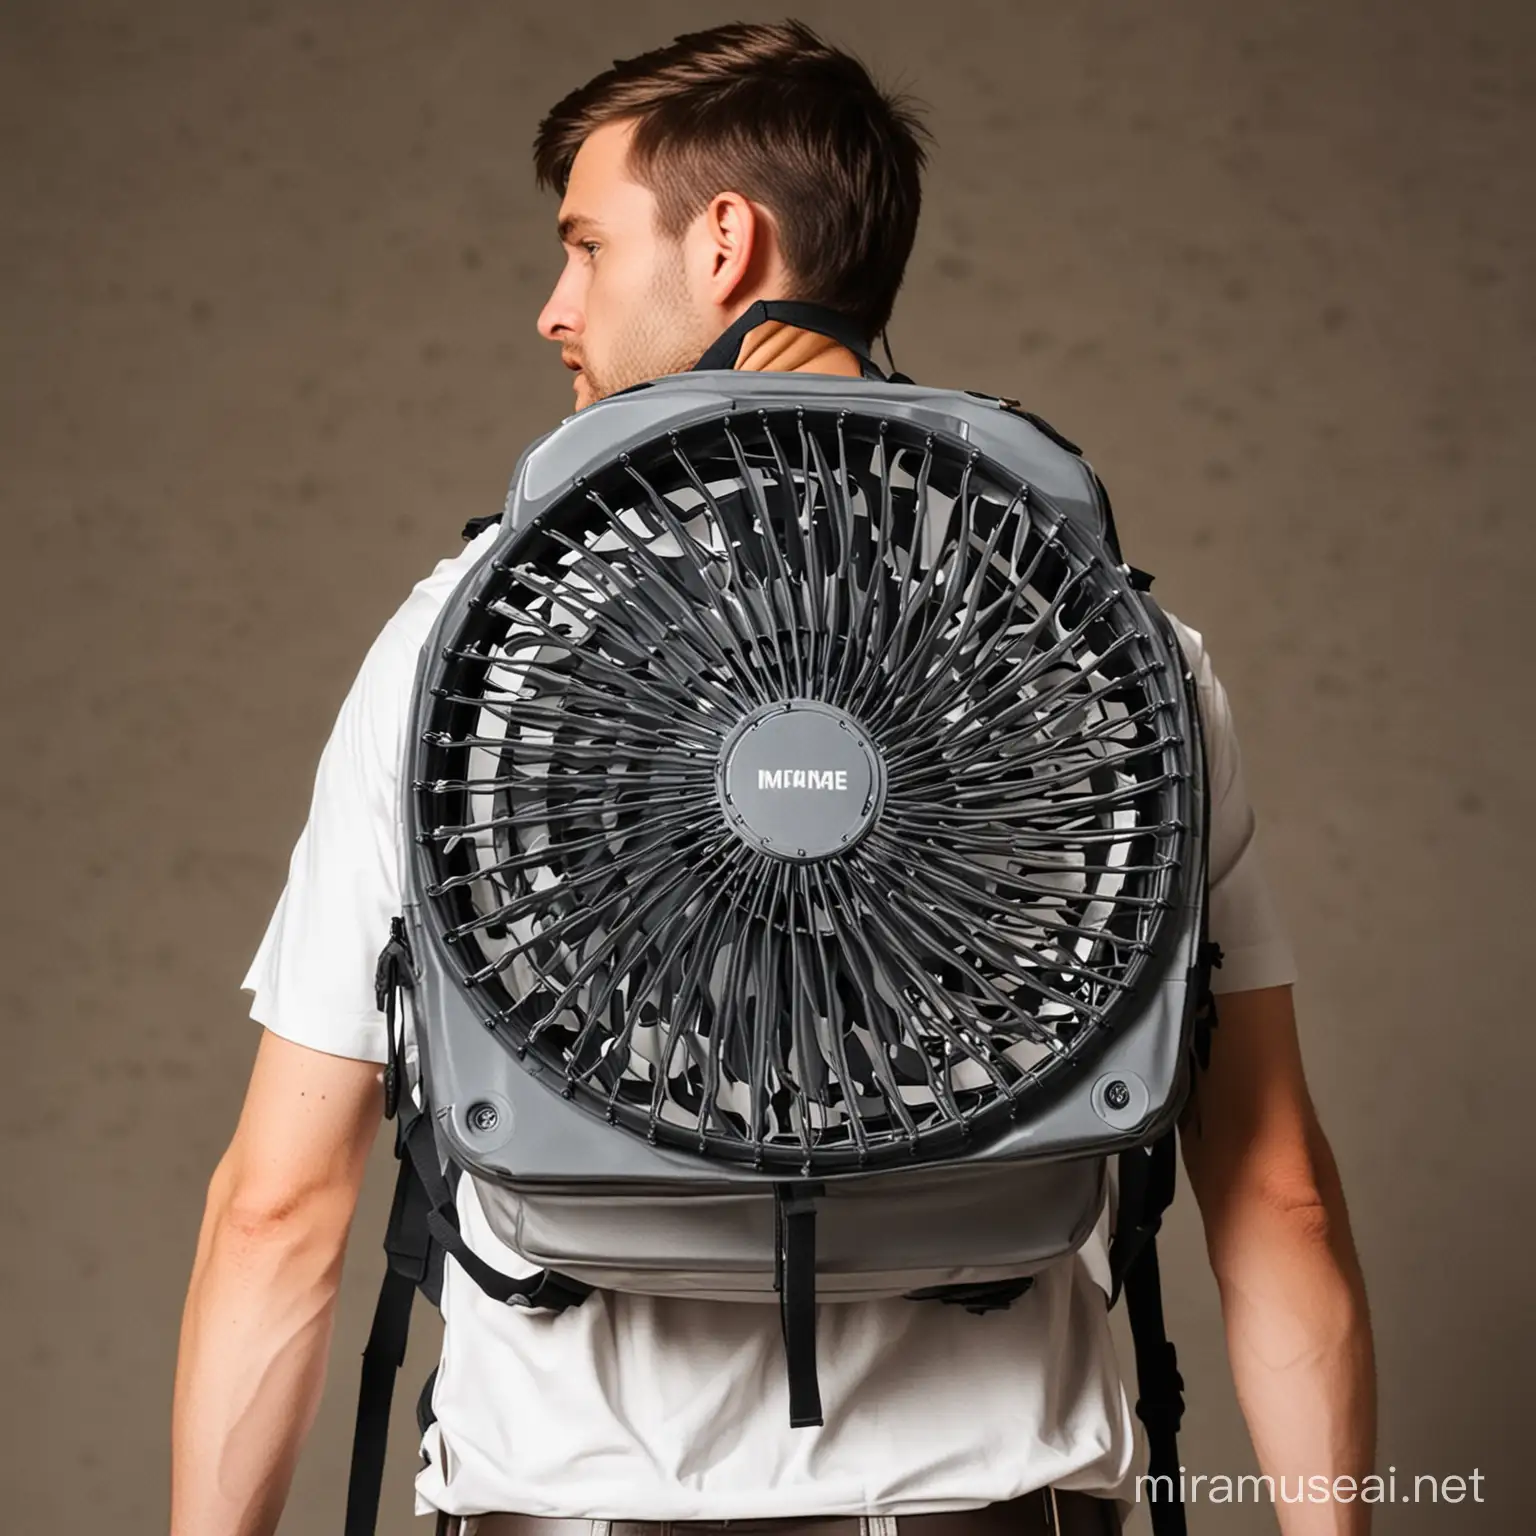 Un ventilador en forma de mochila para afrontar la calor, meme